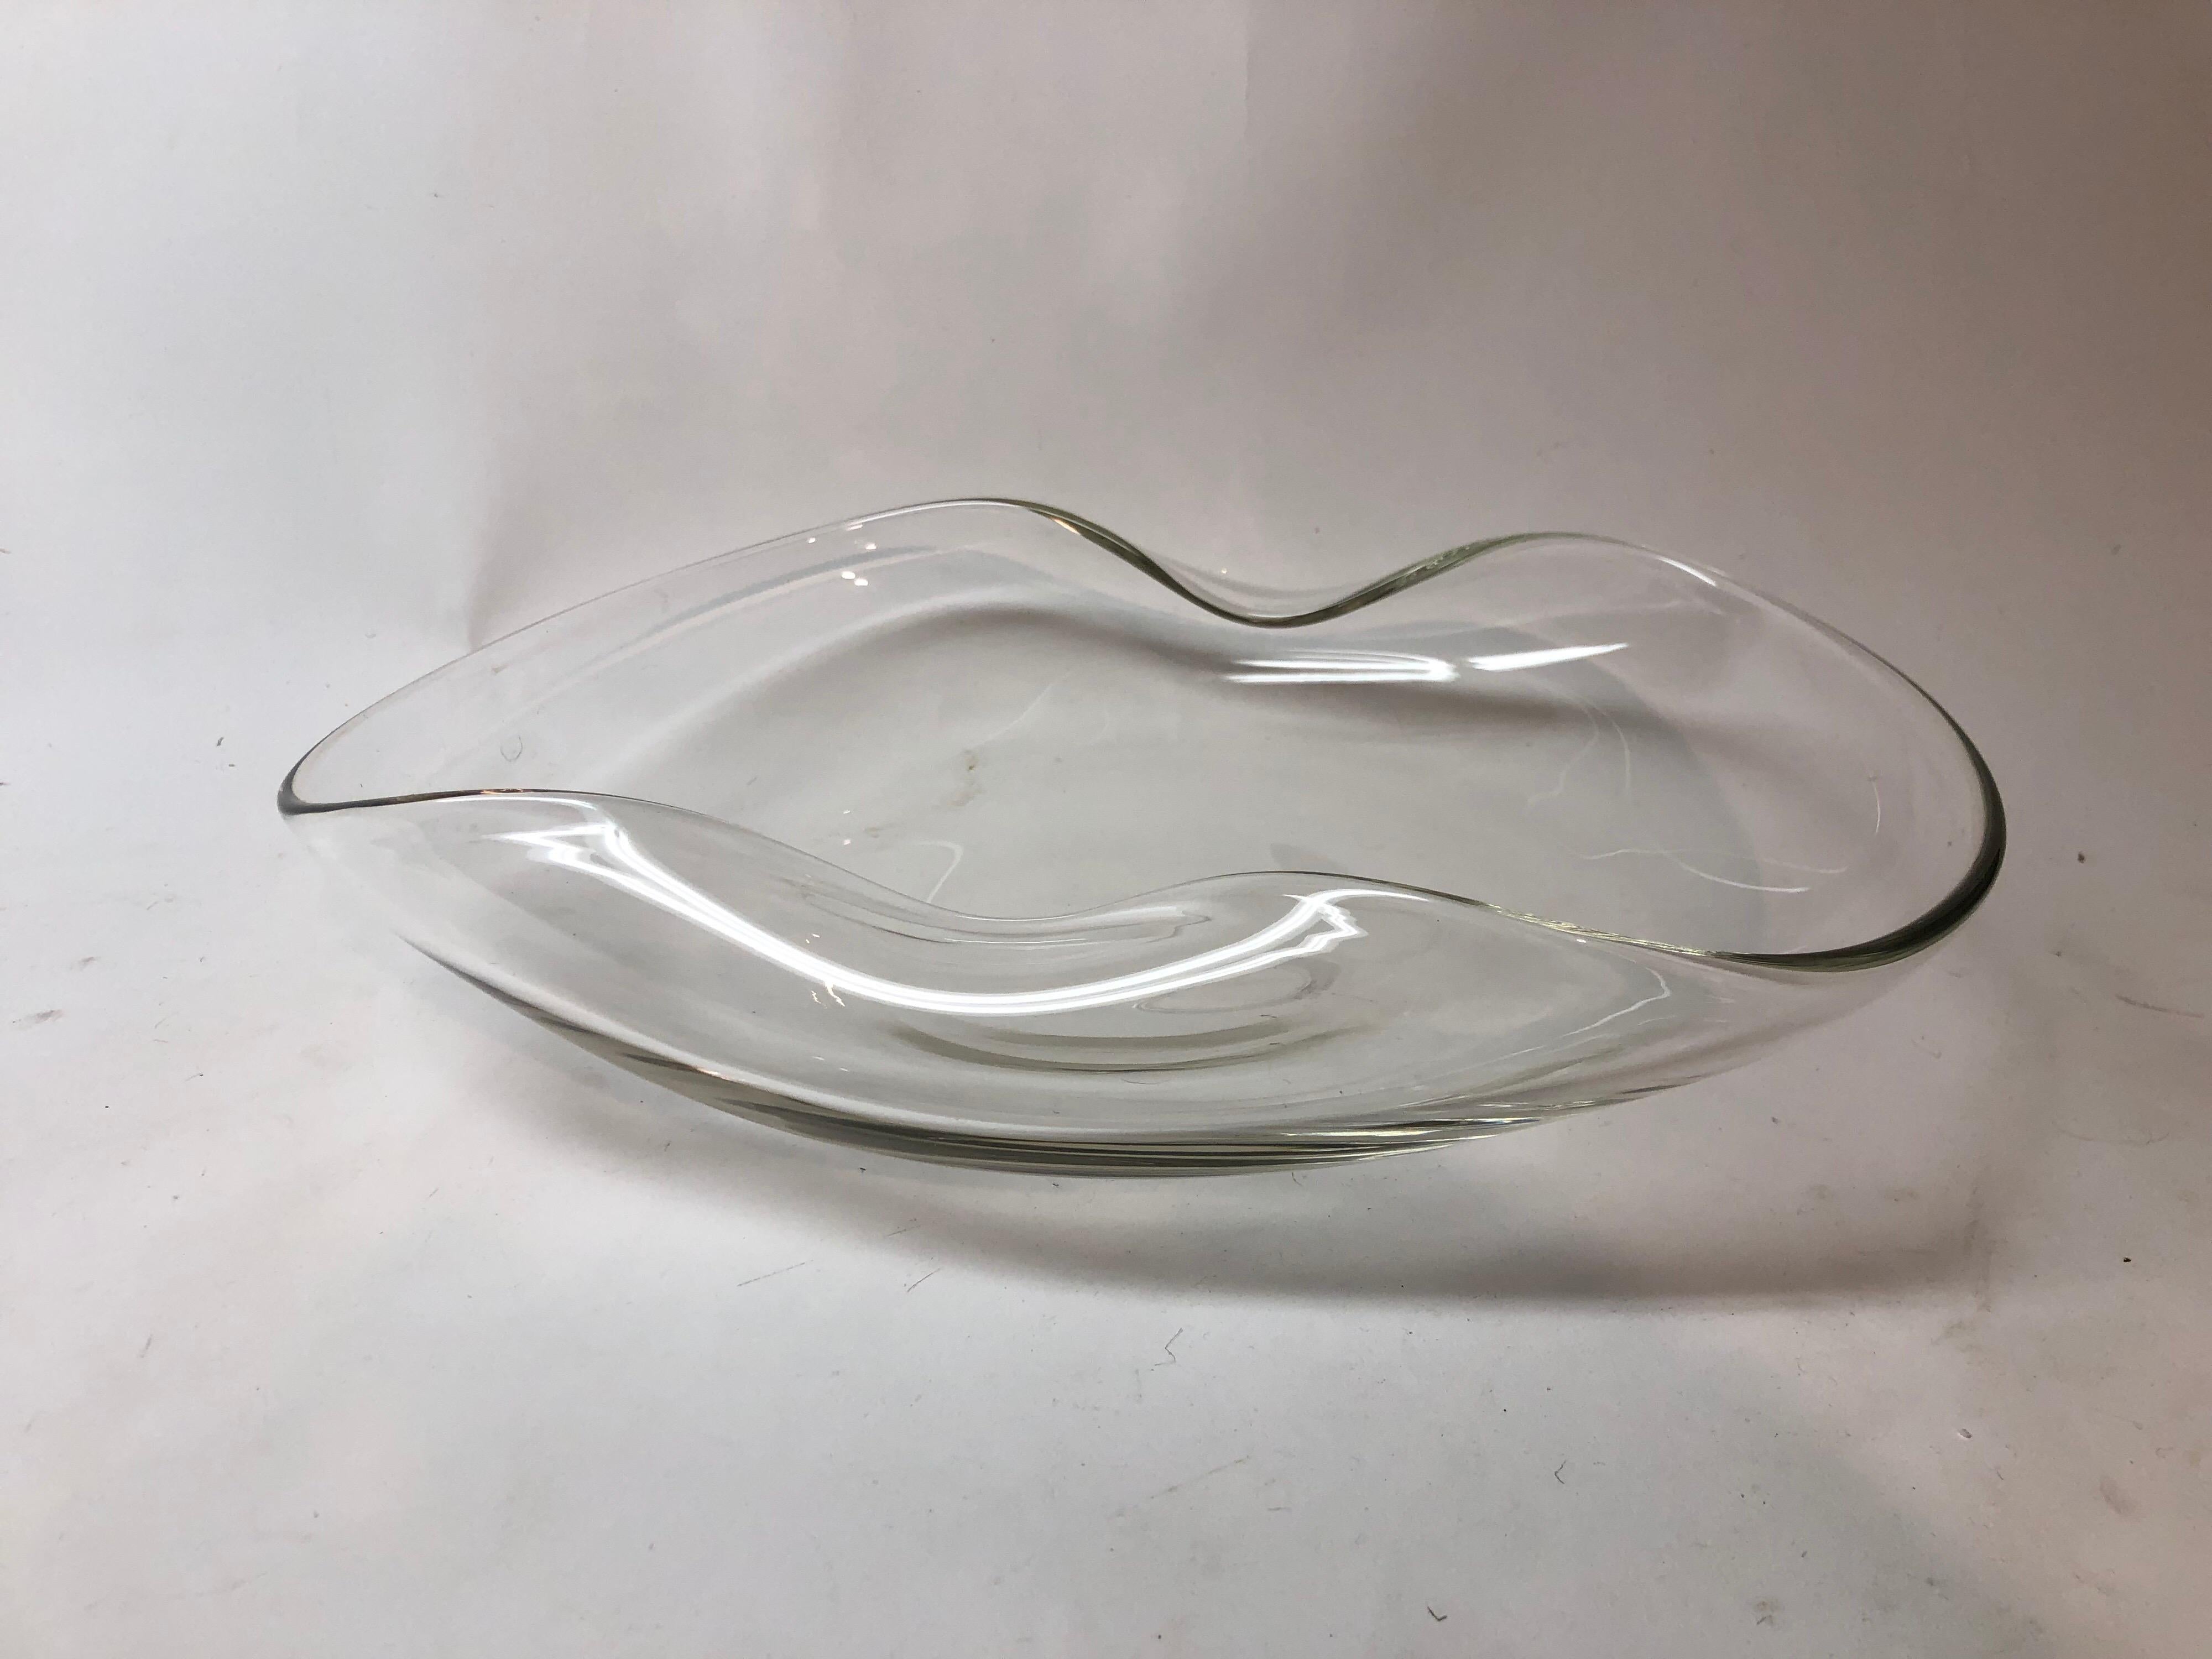 Thumbprint bowls by Elsa Peretti for Tiffany & Co.